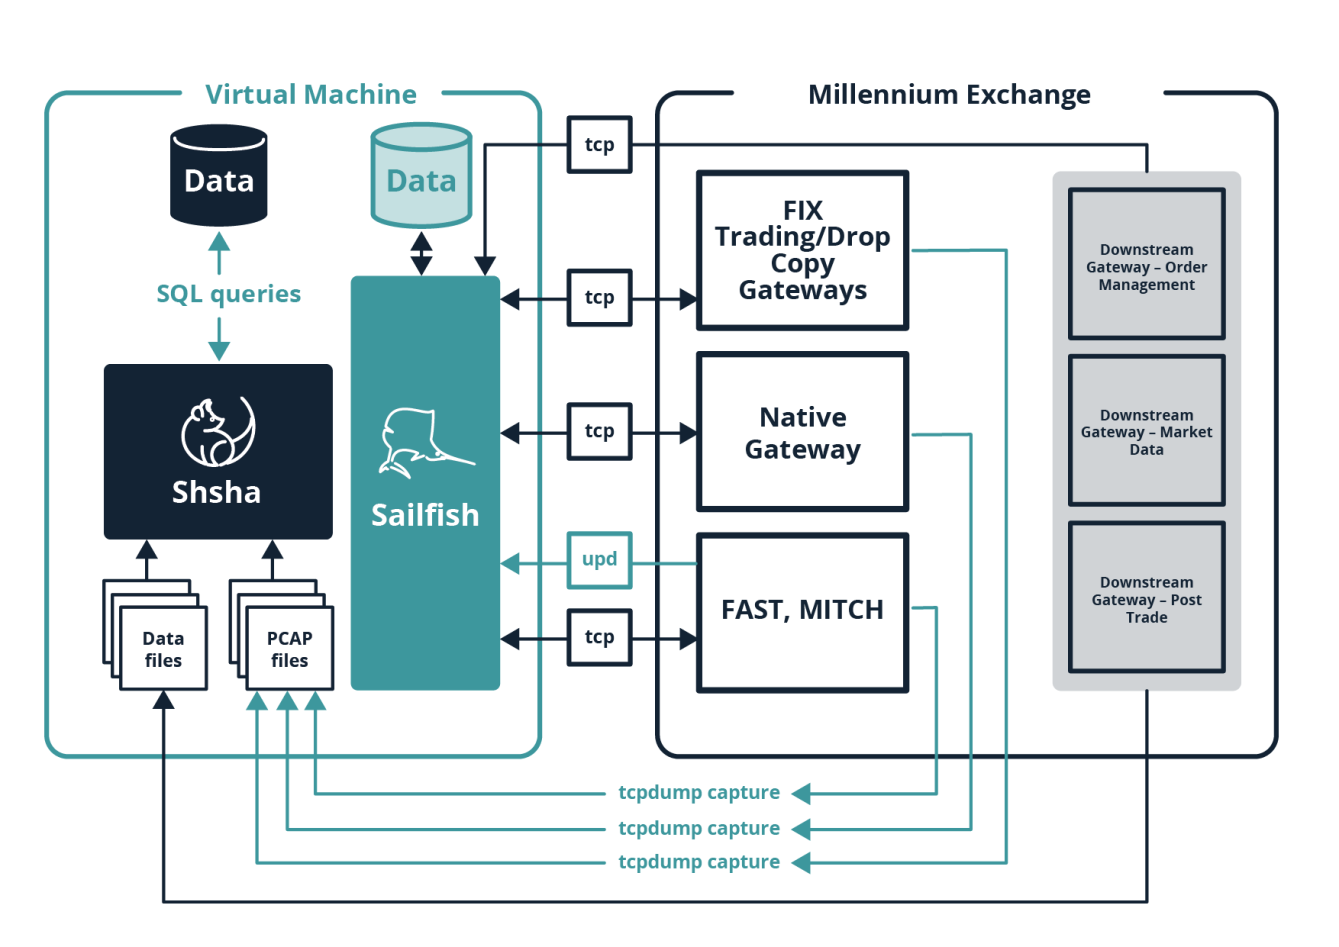 Exactpro - JSE collaboration to test the Millennium Exchange™ platform